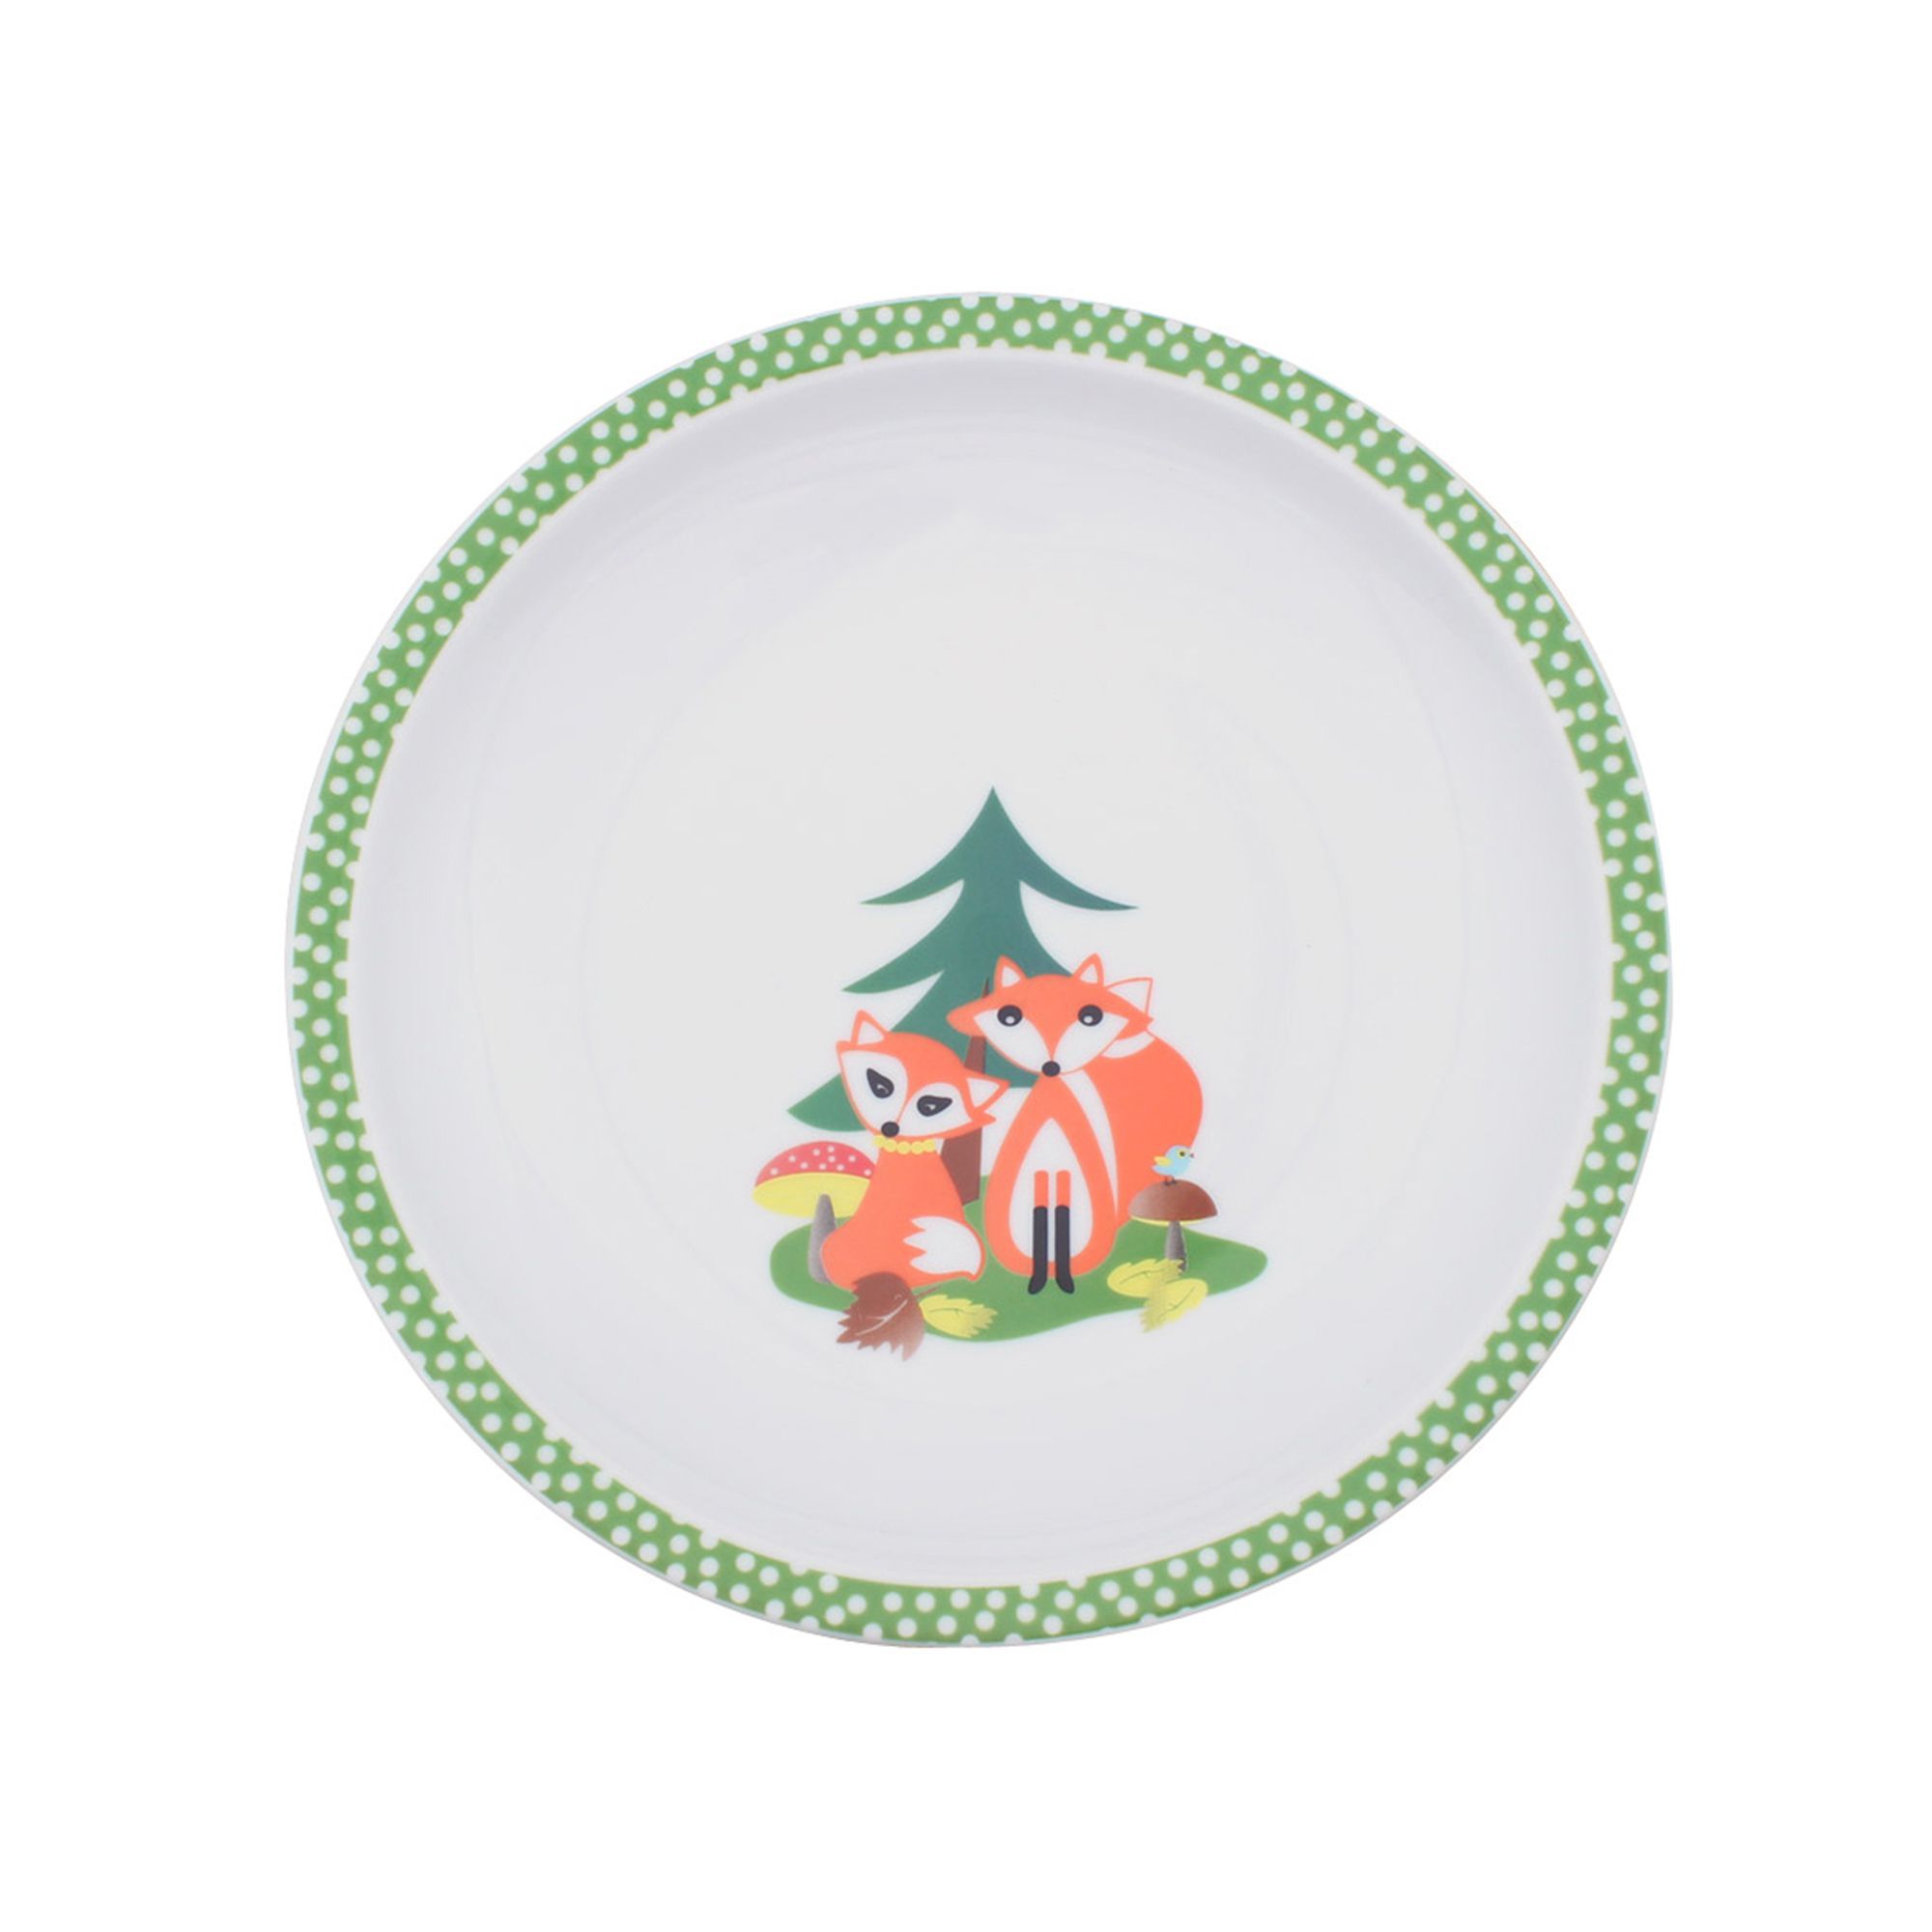 Eschenbach Children's tableware | Filou & Fred | Deep plate 20cm